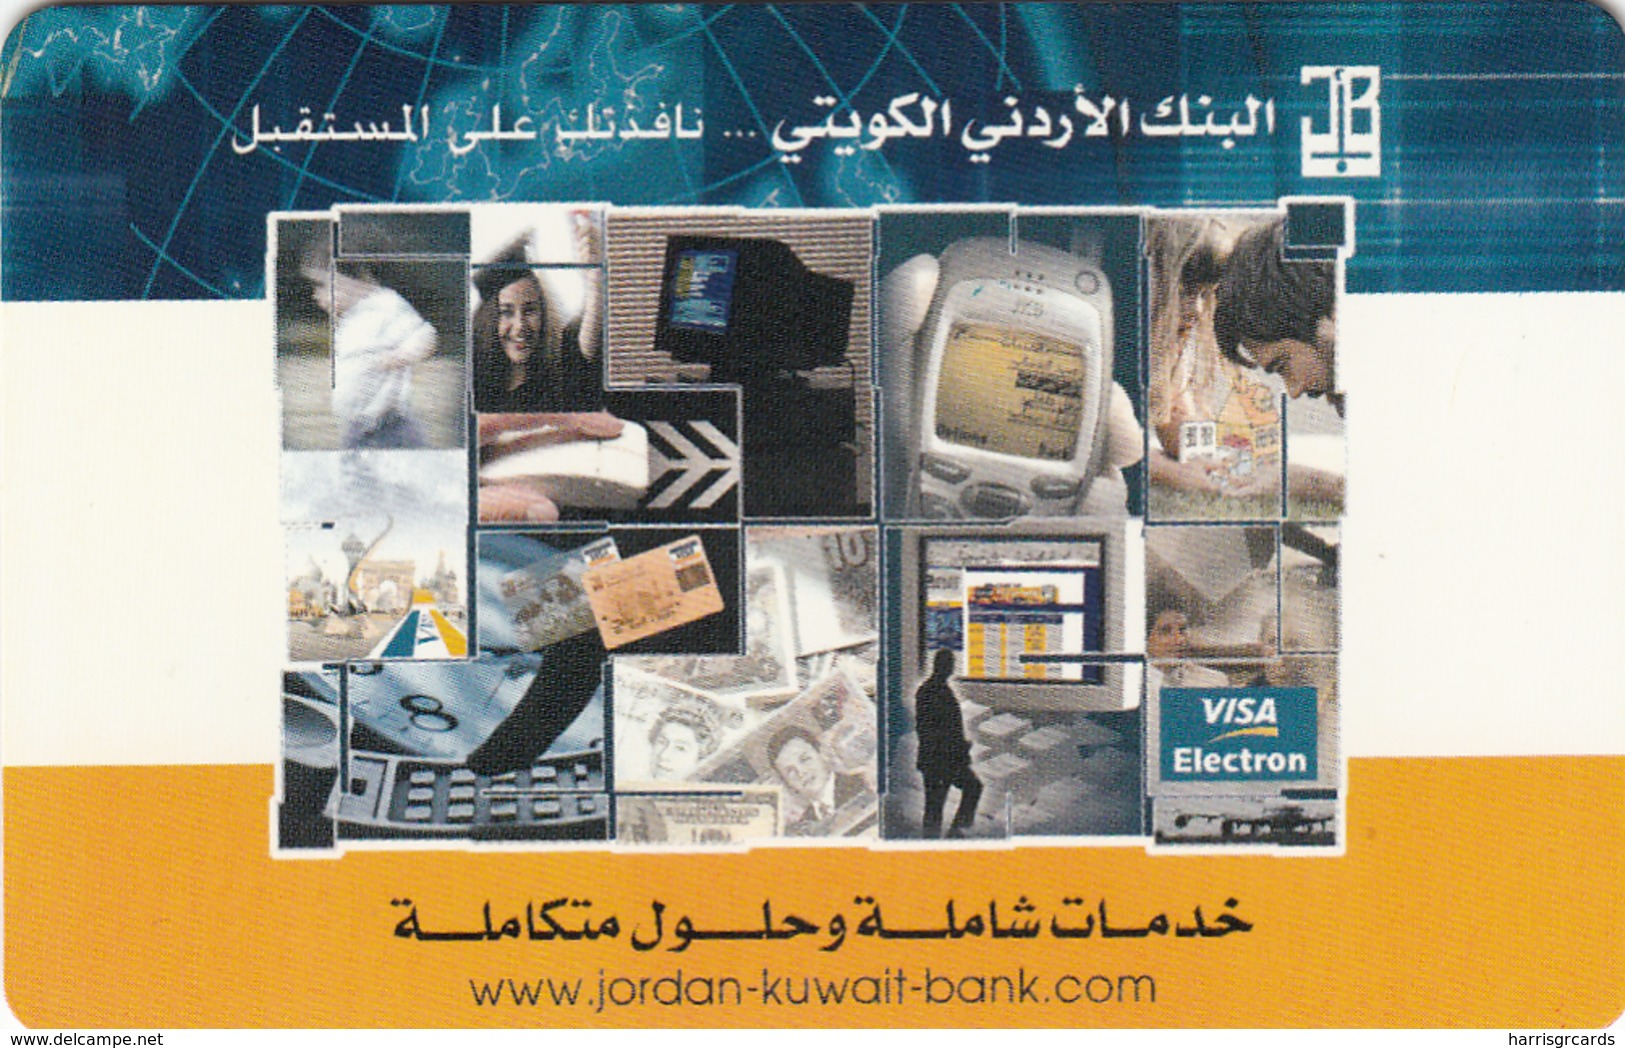 JORDAN - Jordan Kuwait Bank(3 JD), 08/01, Sample No Chip And No CN - Jordan